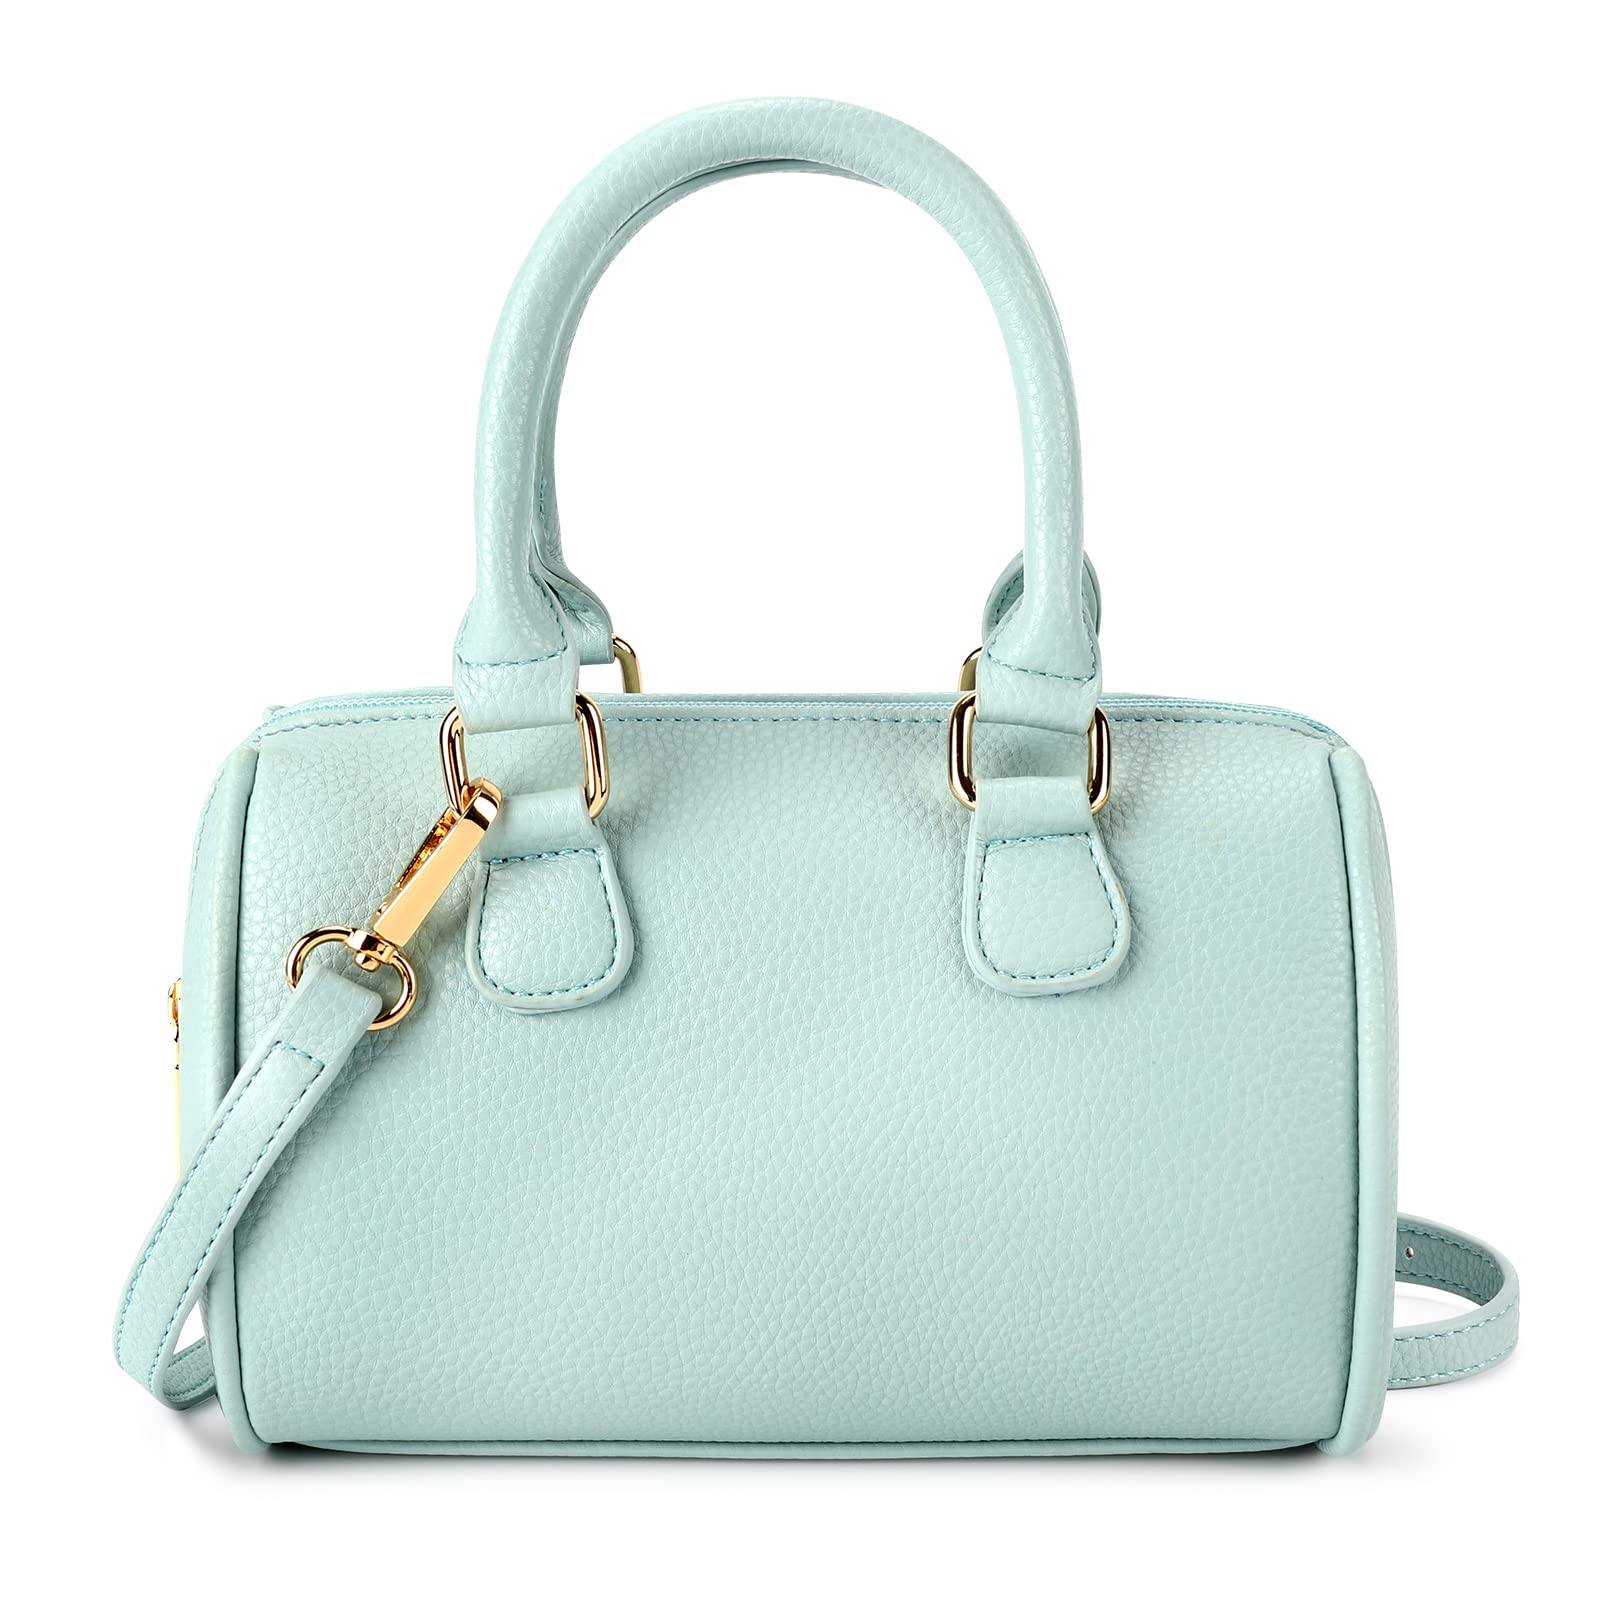 So Grown-Up Handbag Mibasies Blue1 